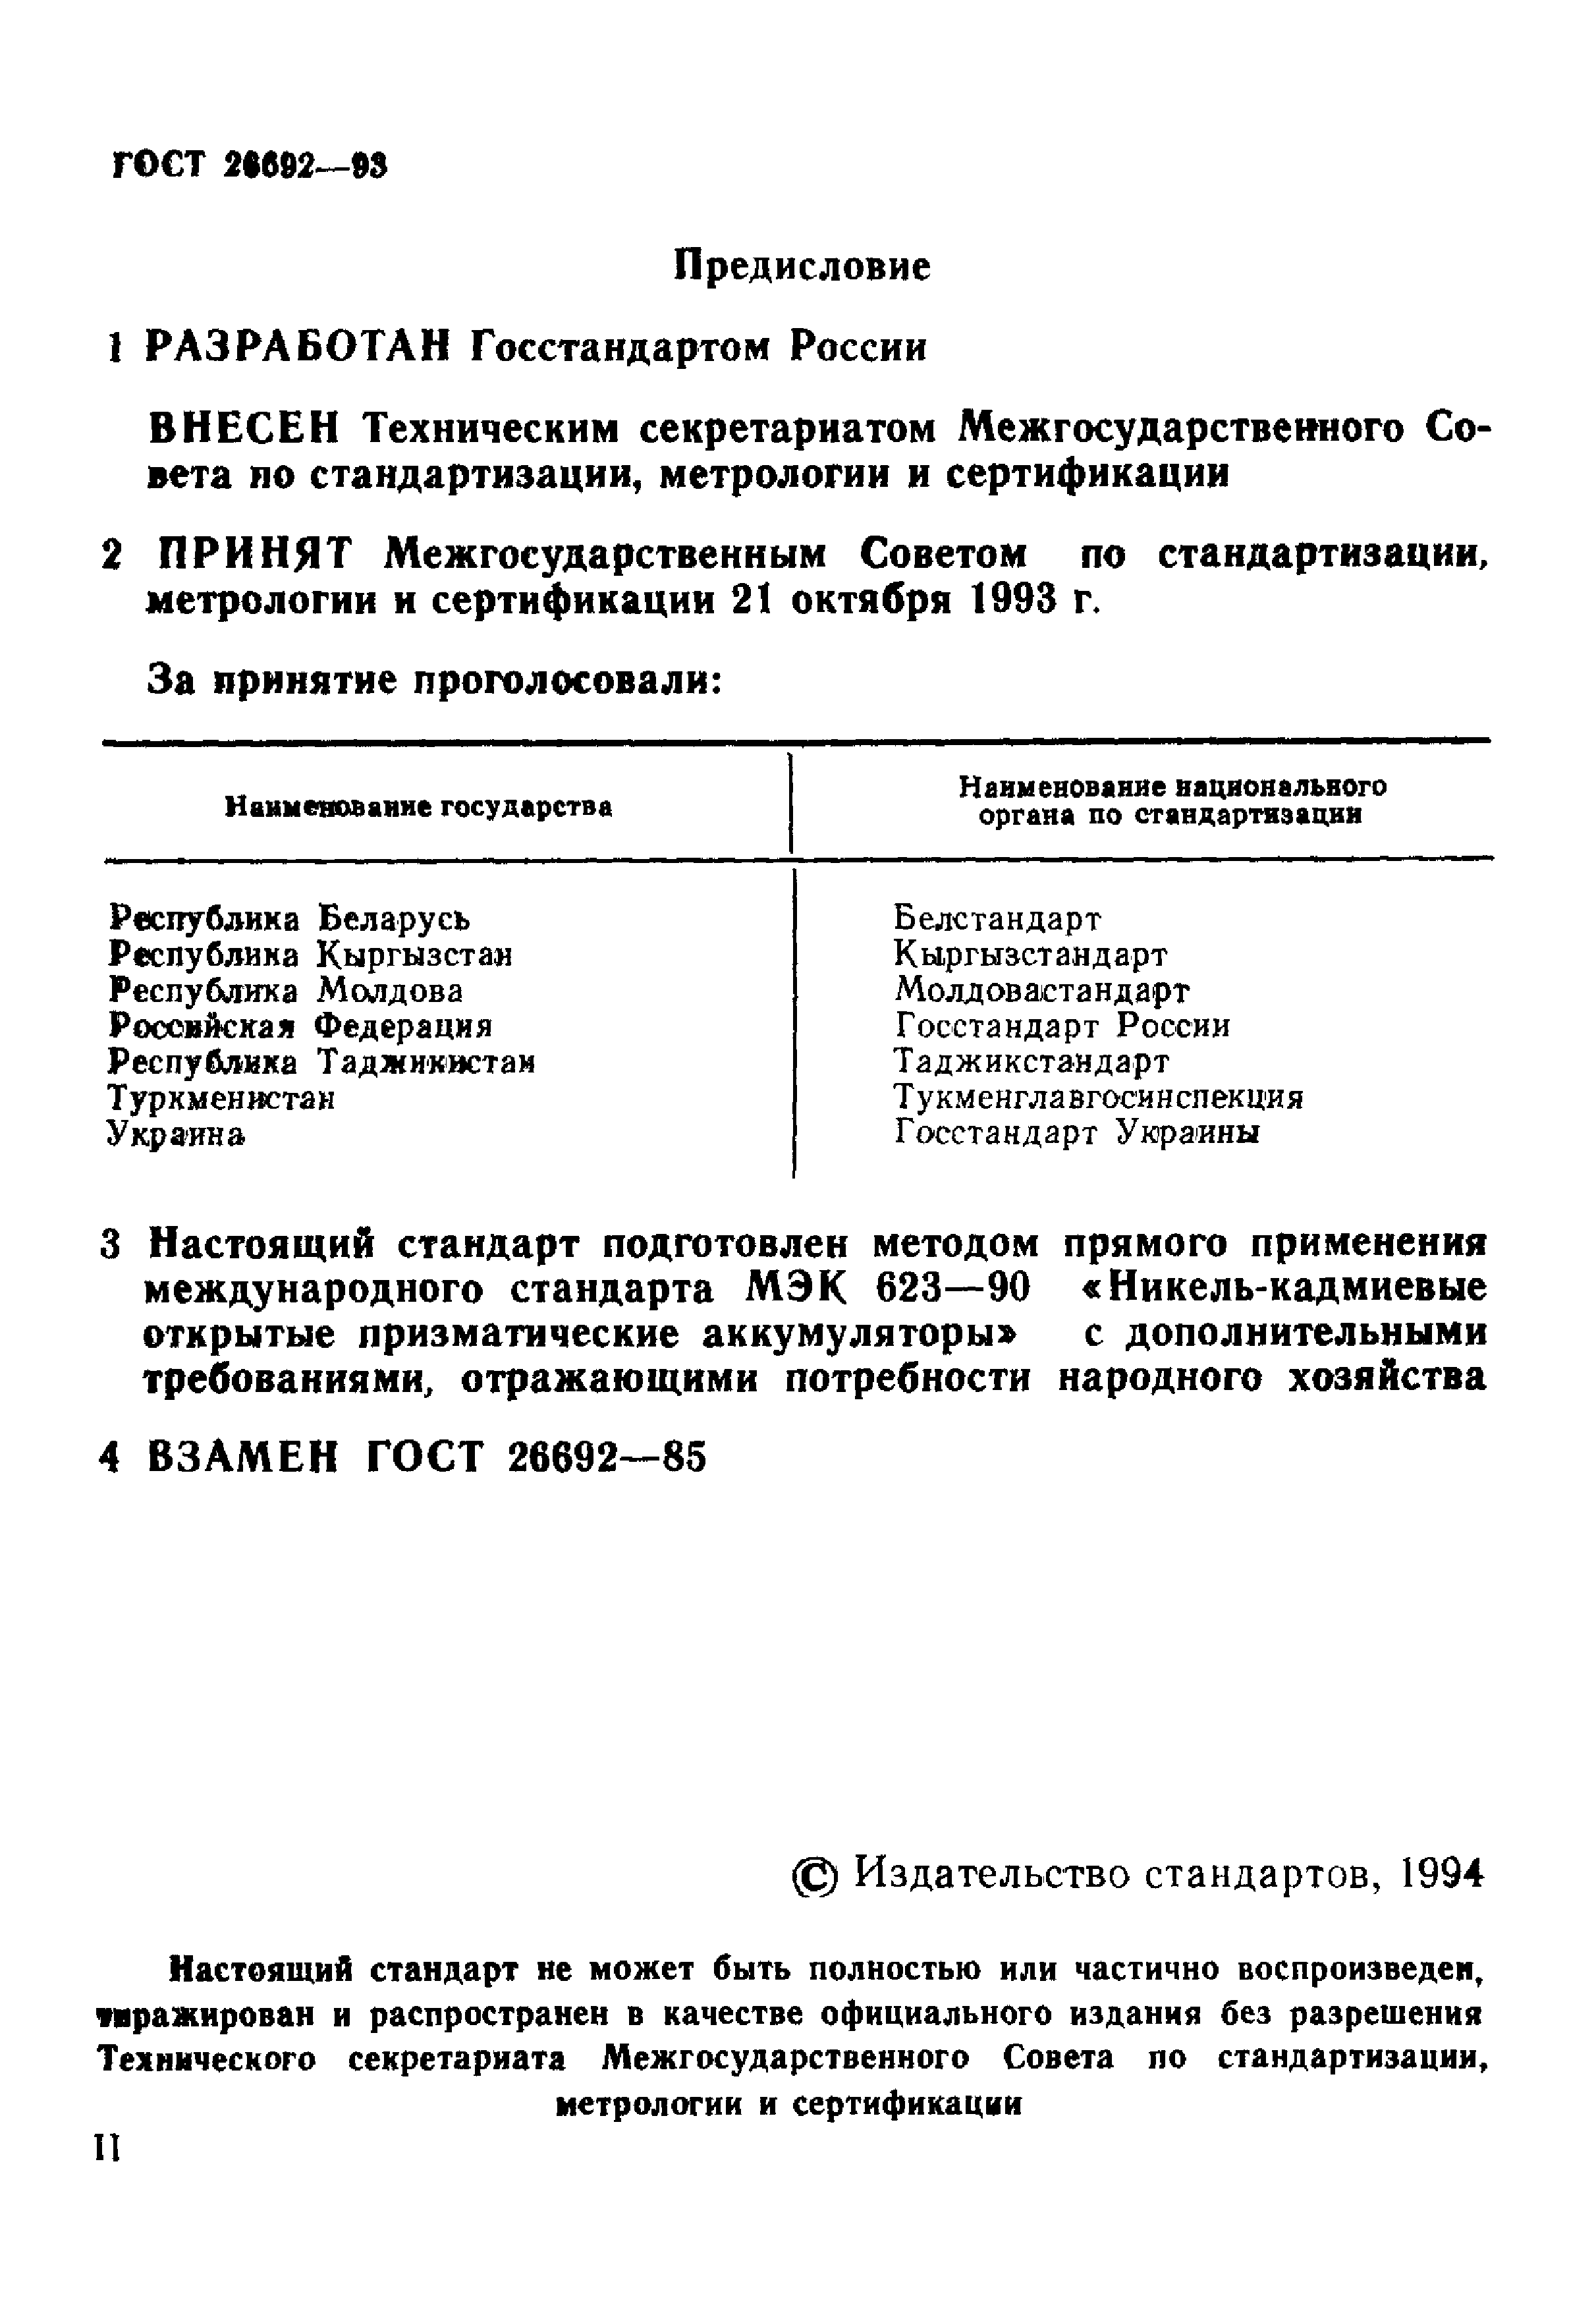 ГОСТ 26692-93